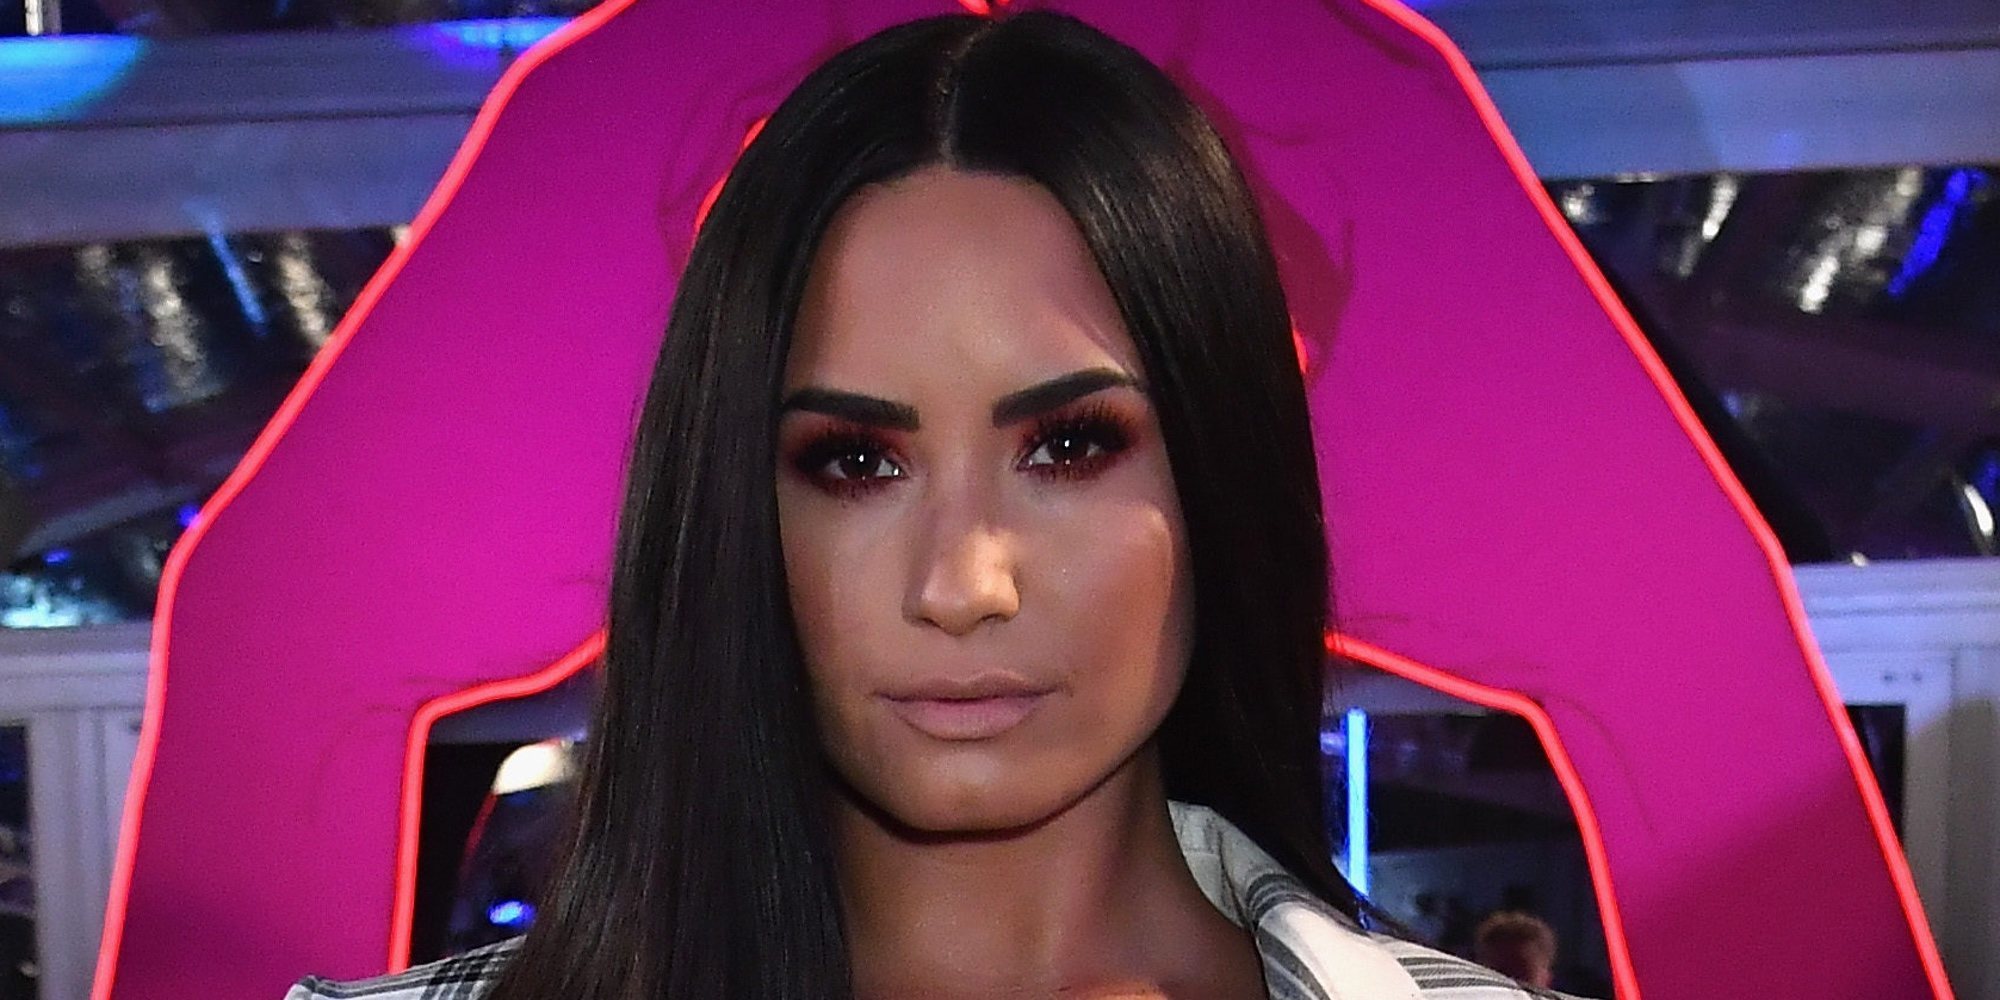 La sobredosis de Demi Lovato fue con la misma droga que mató a Prince